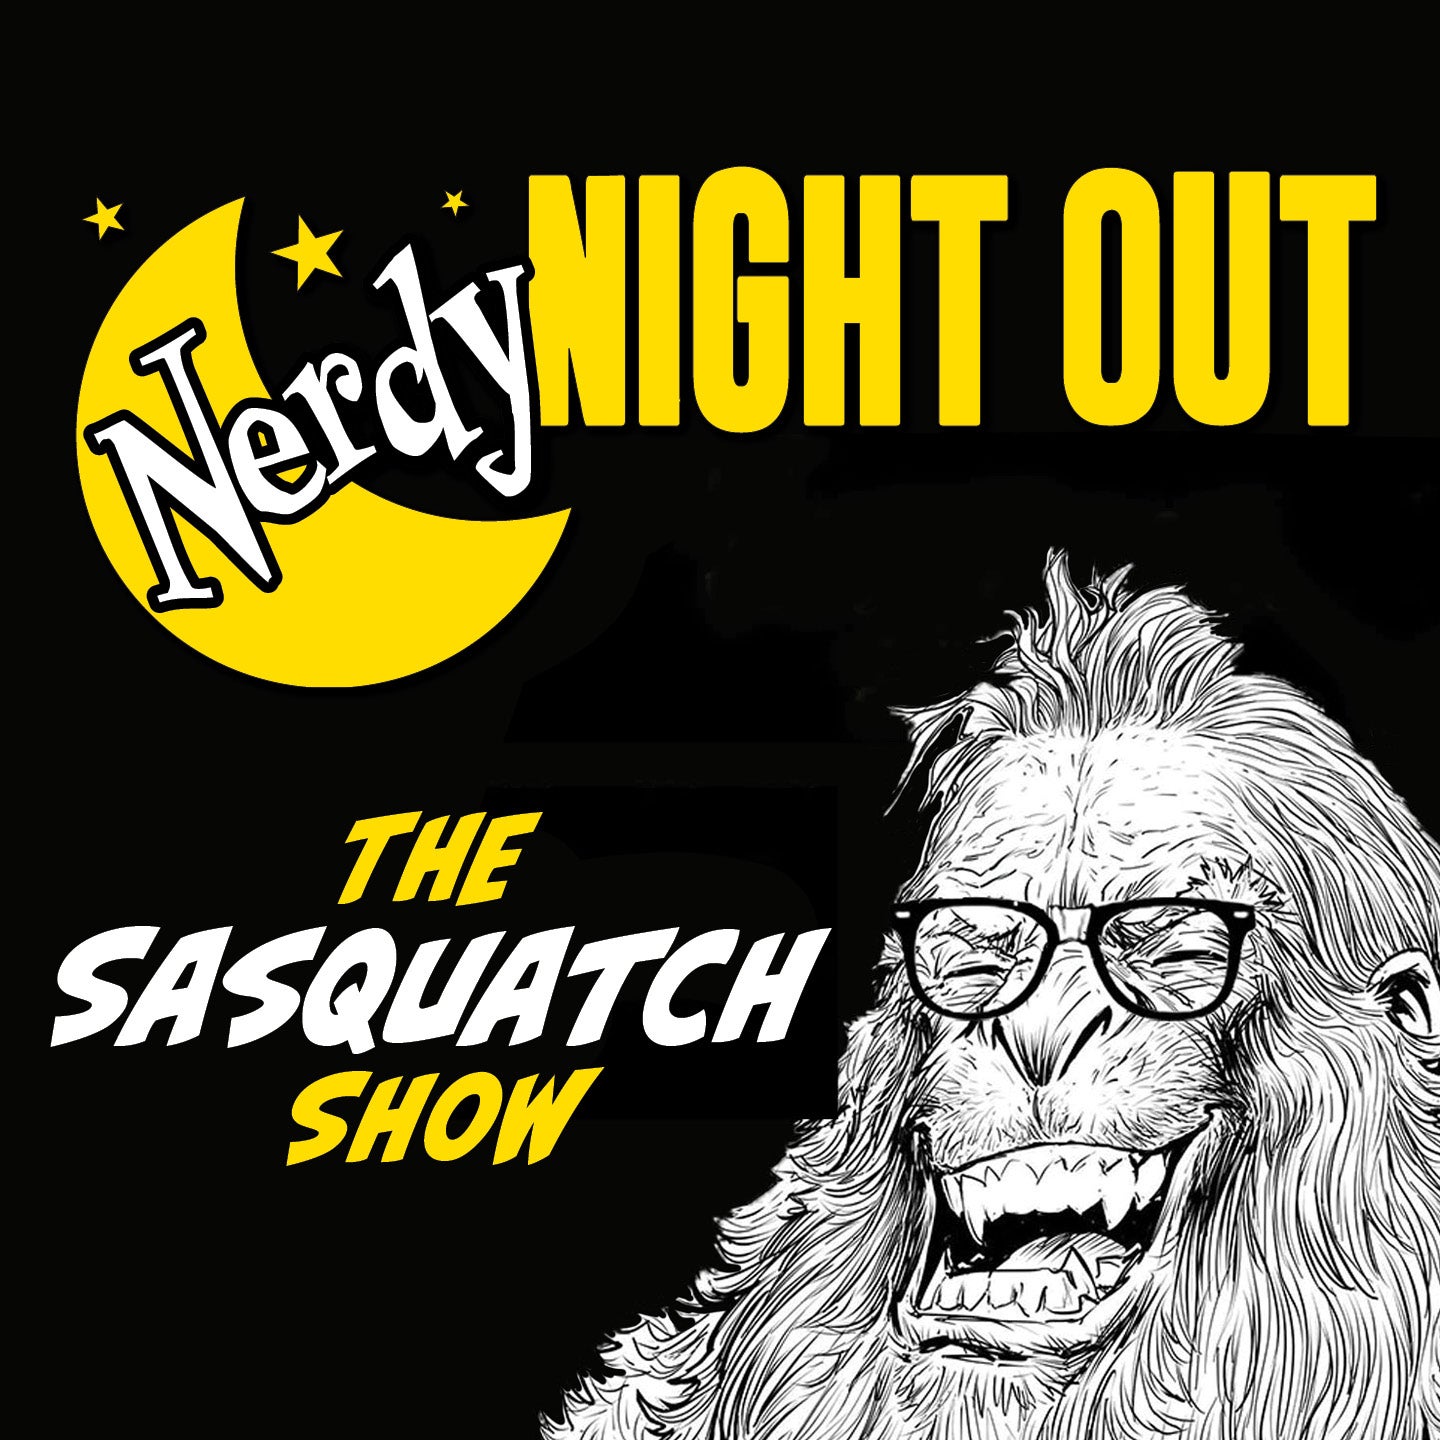 Nerdy Night Out: The Sasquatch Show